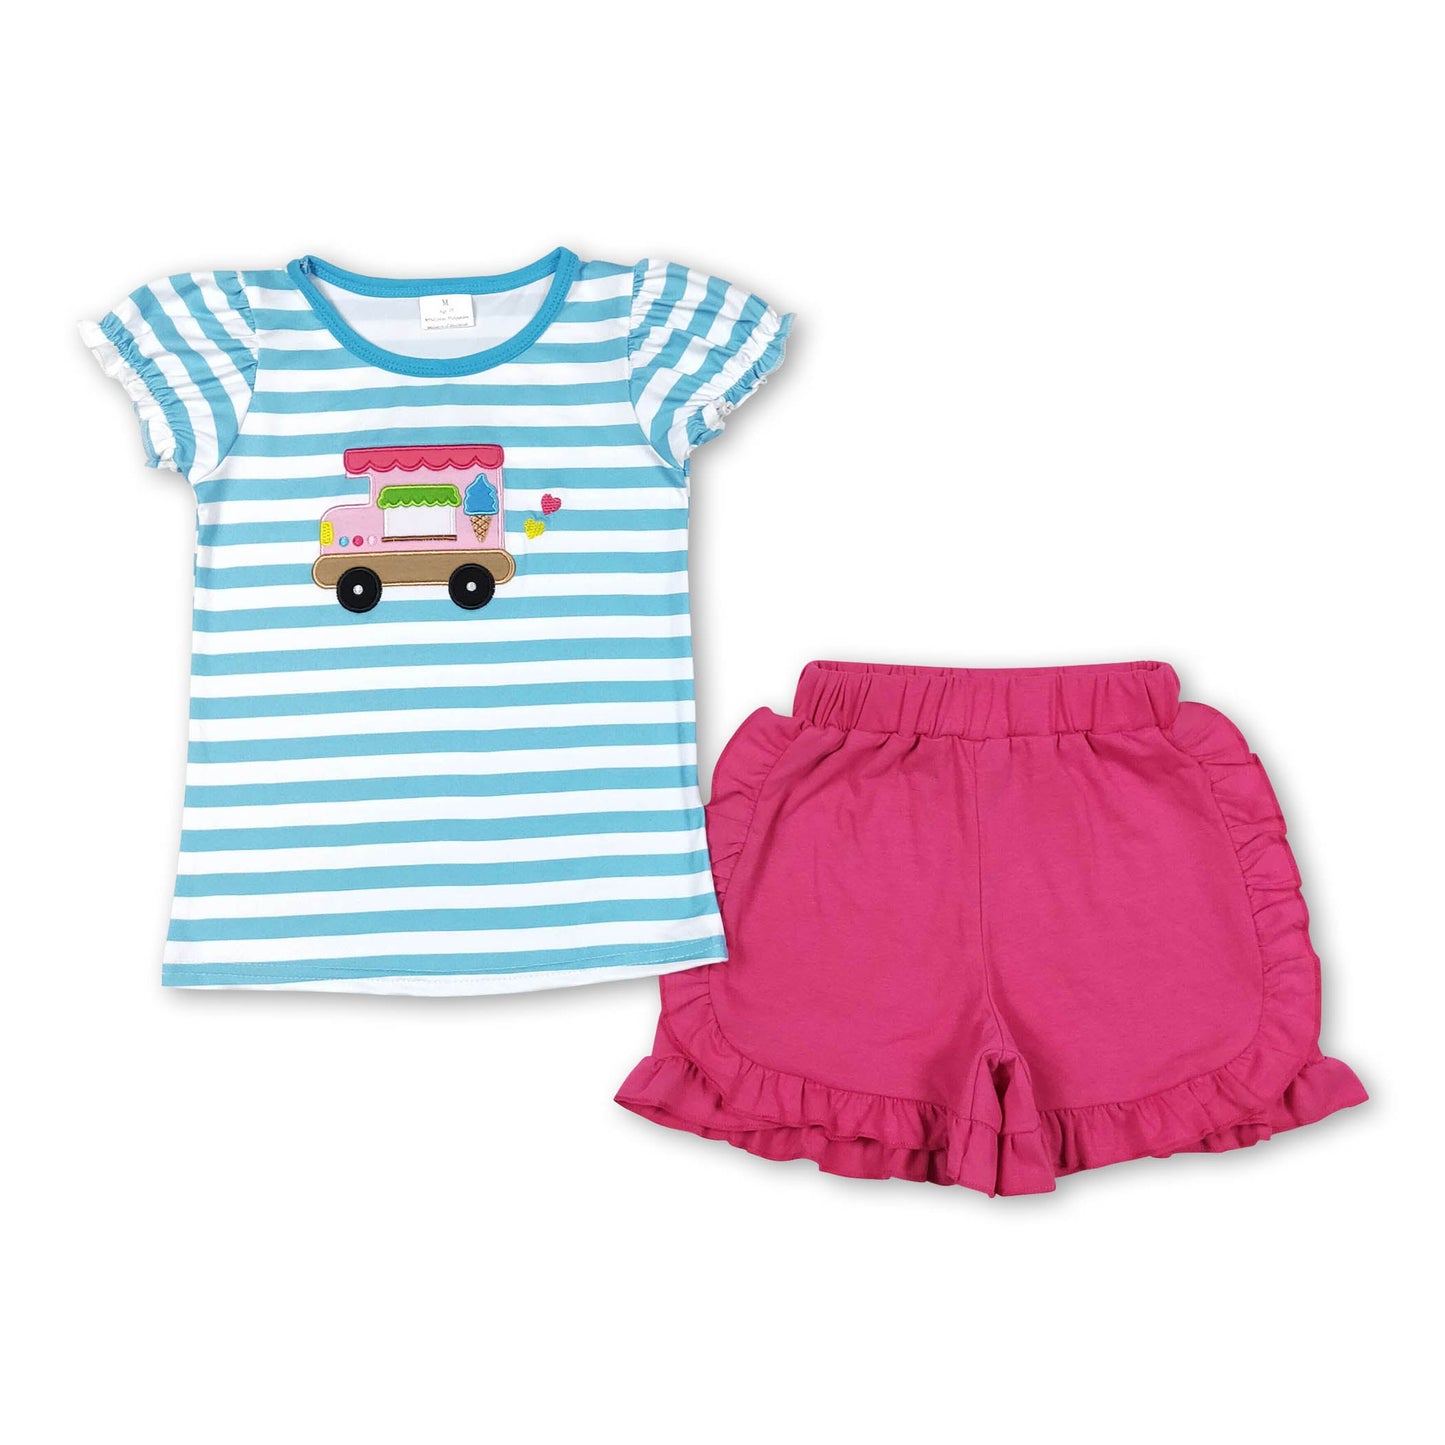 Stripe ice cream cart top ruffle shorts girls summer clothes